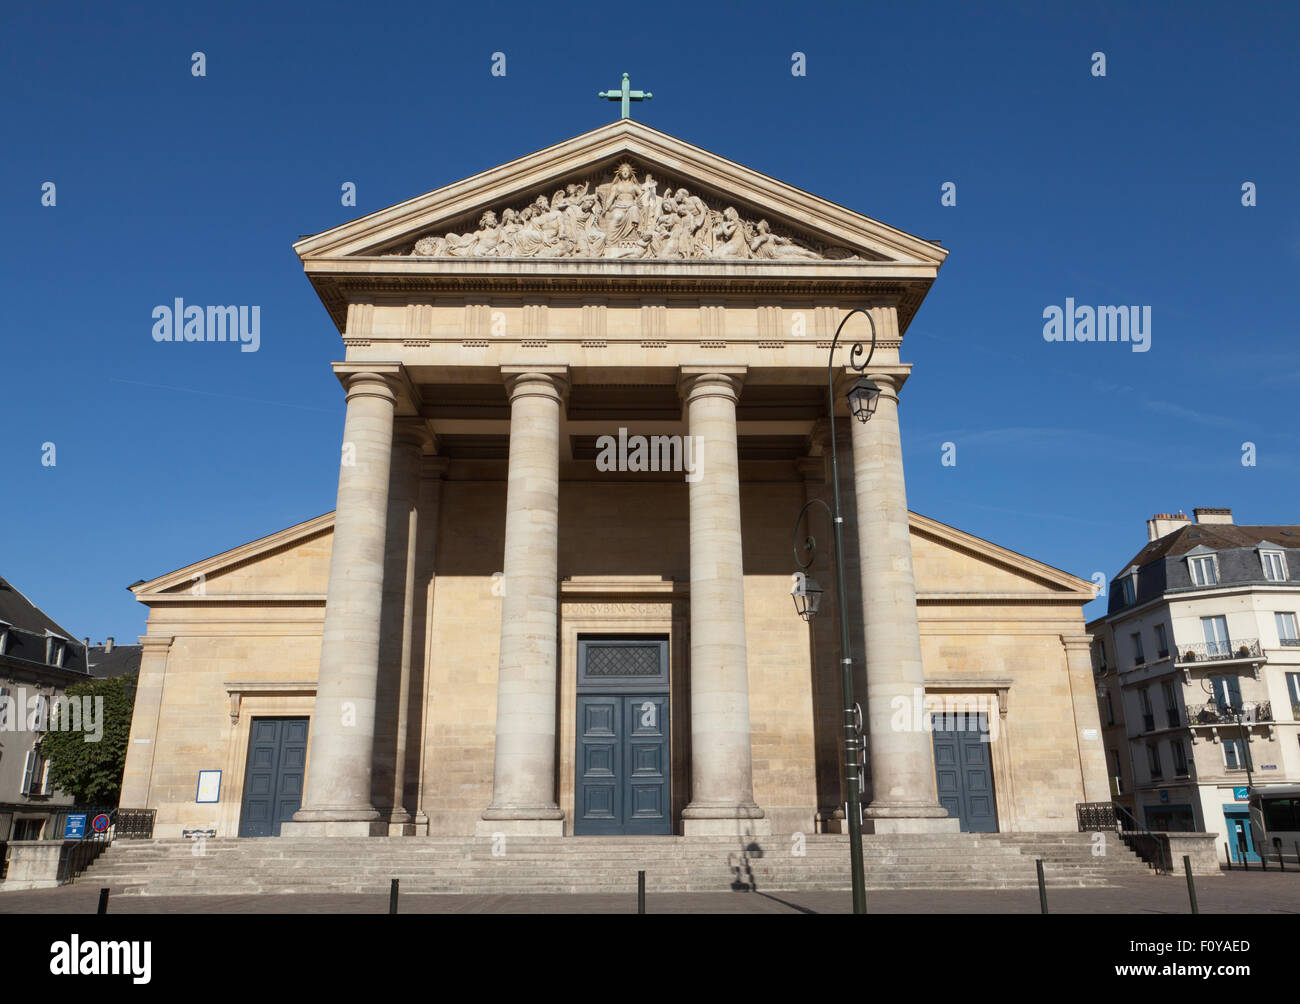 The Church of Saint-Germain (Église Saint-Germain), Saint-Germain-en-Laye, Paris, France. Stock Photo